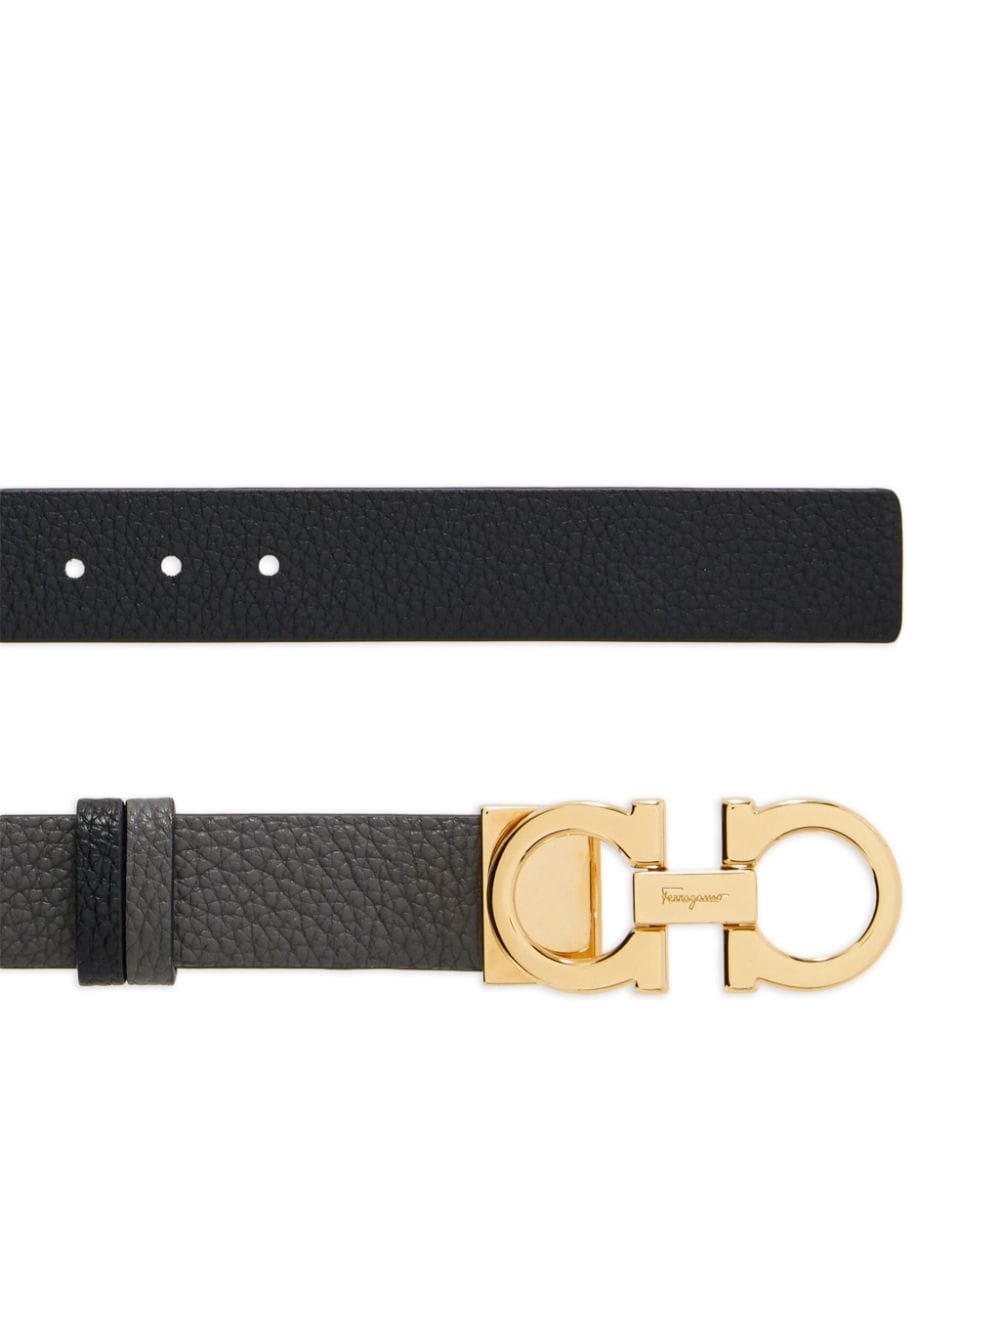 Gancini-buckle reversible leather belt - 2